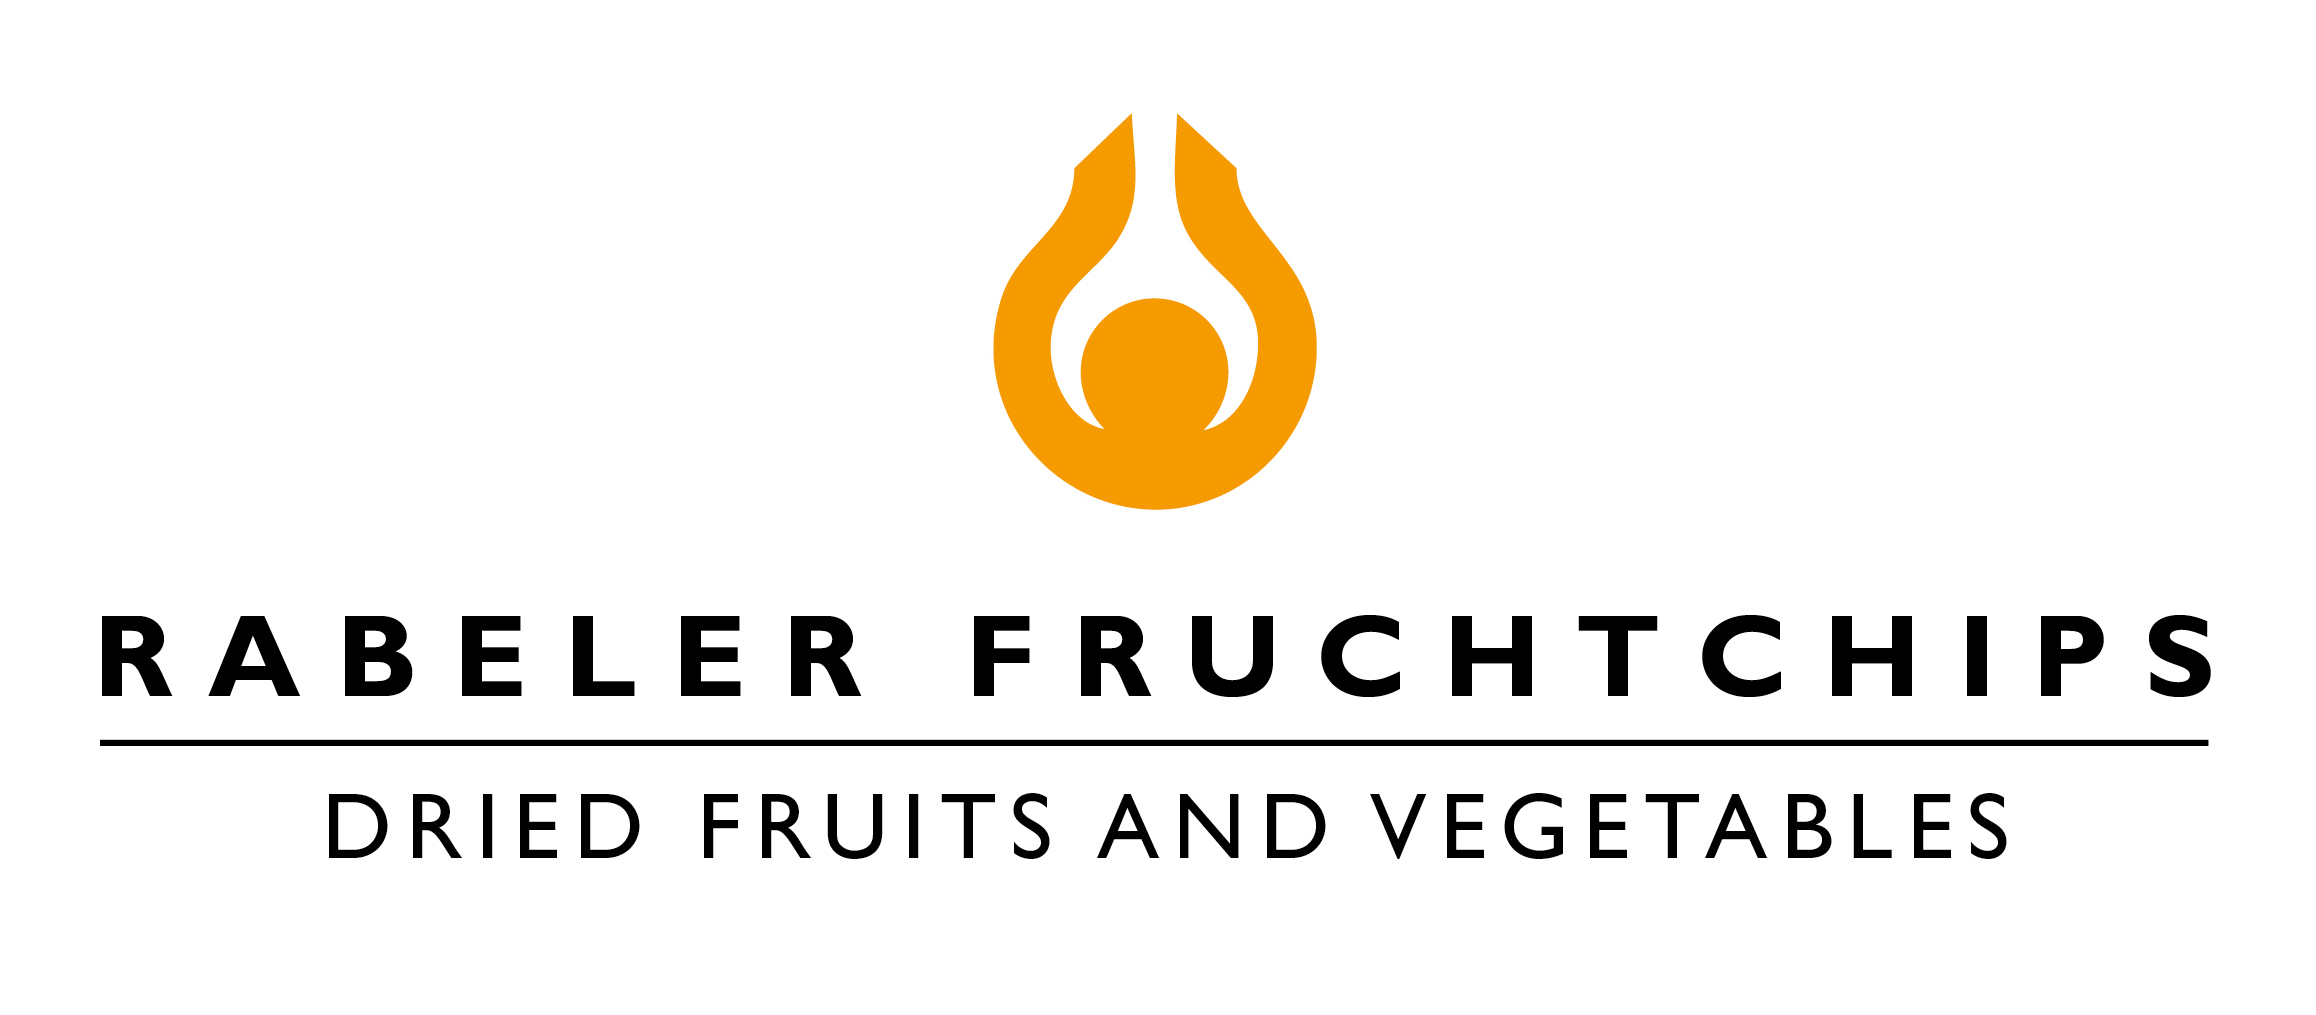 Rabeler Fruchtchips GmbH